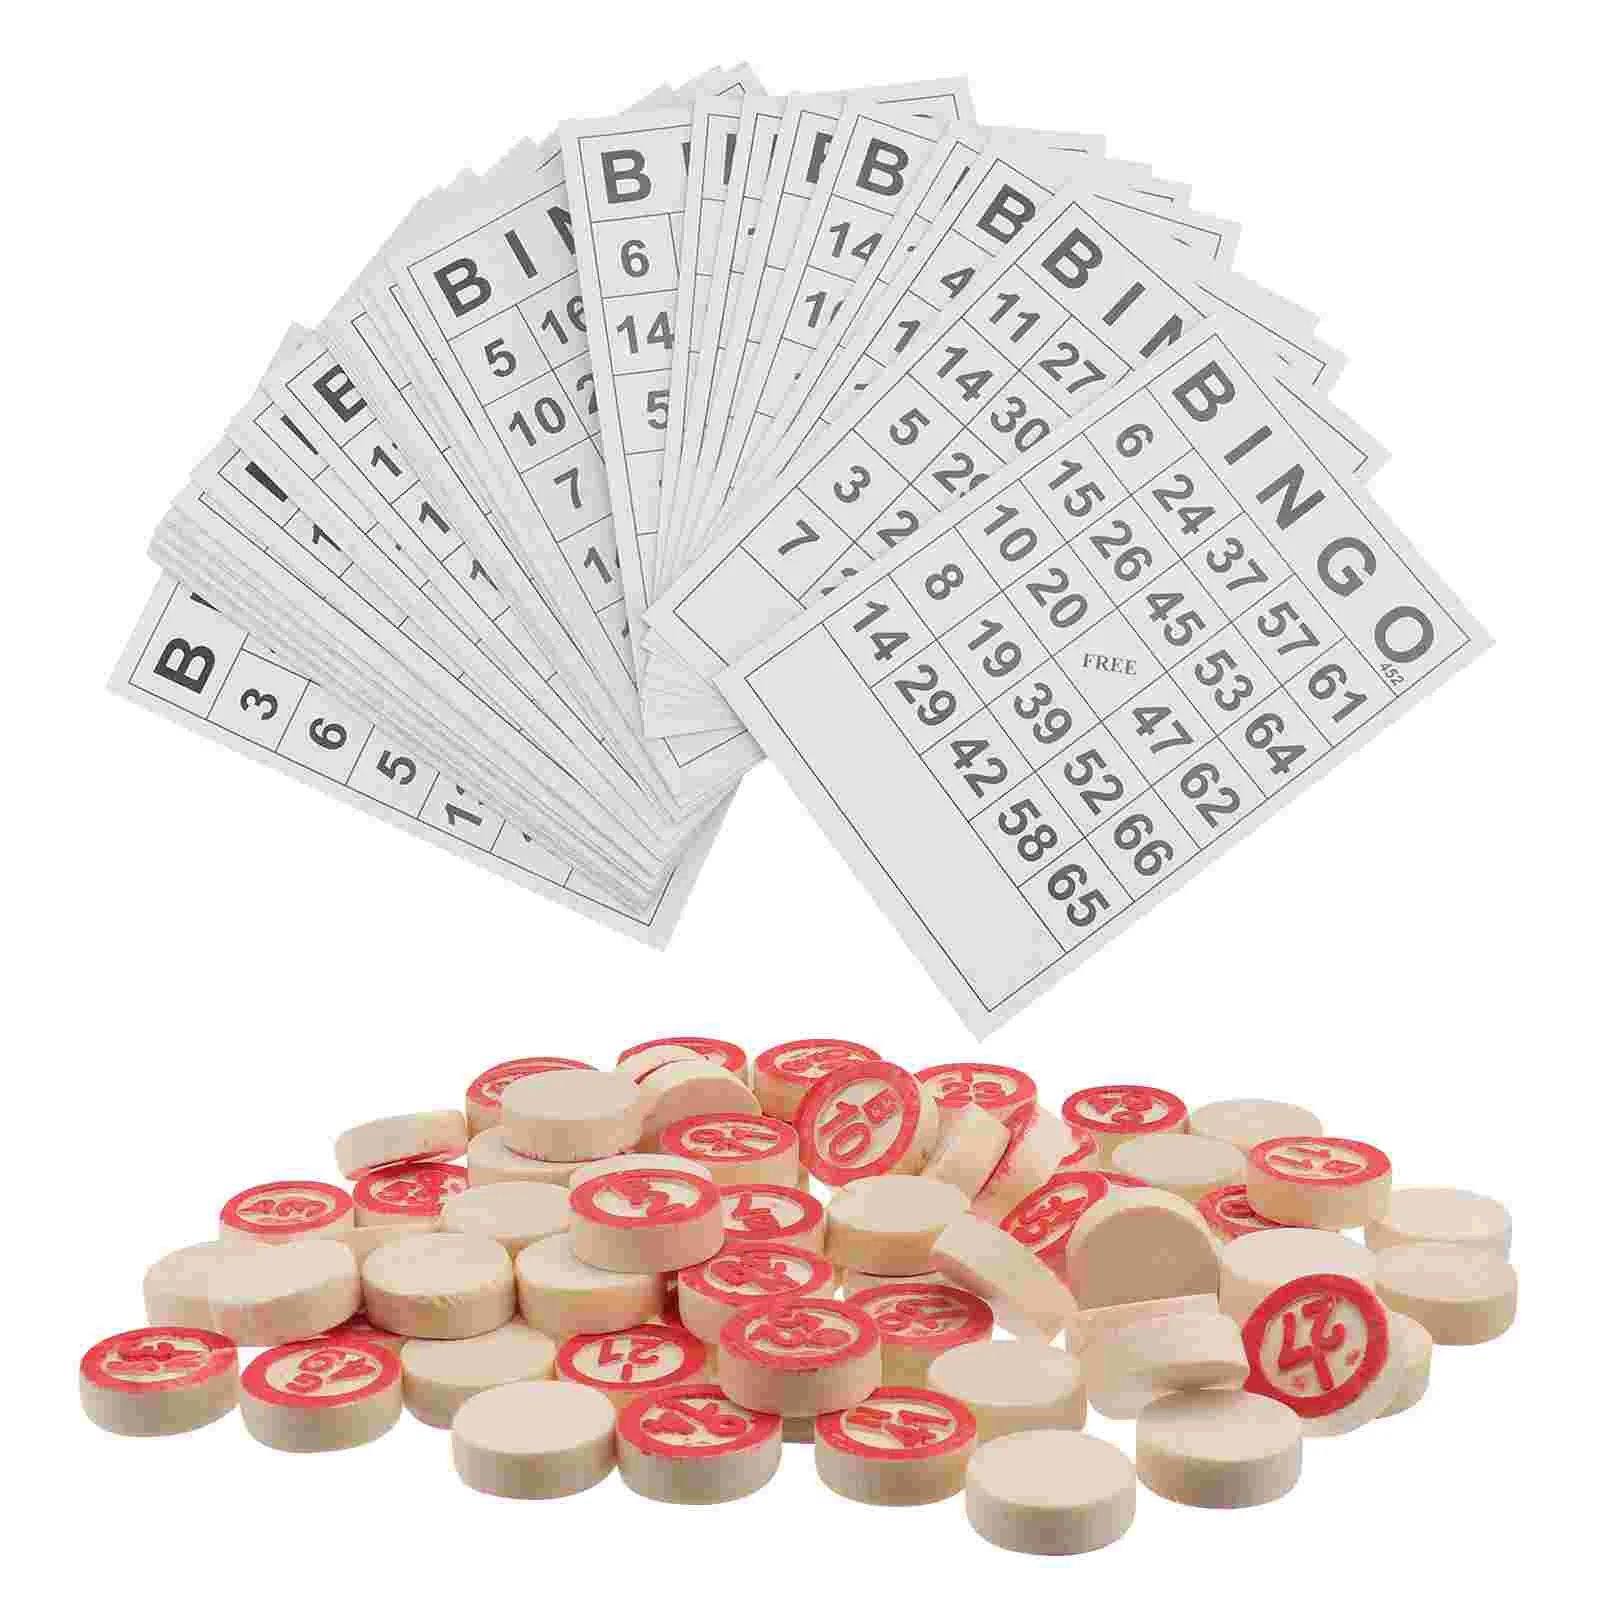 Russian Lotto Bingo Cards Game Set Wood Barrels Bingo Educational Chess Game Toy Wooden Bingo Boards